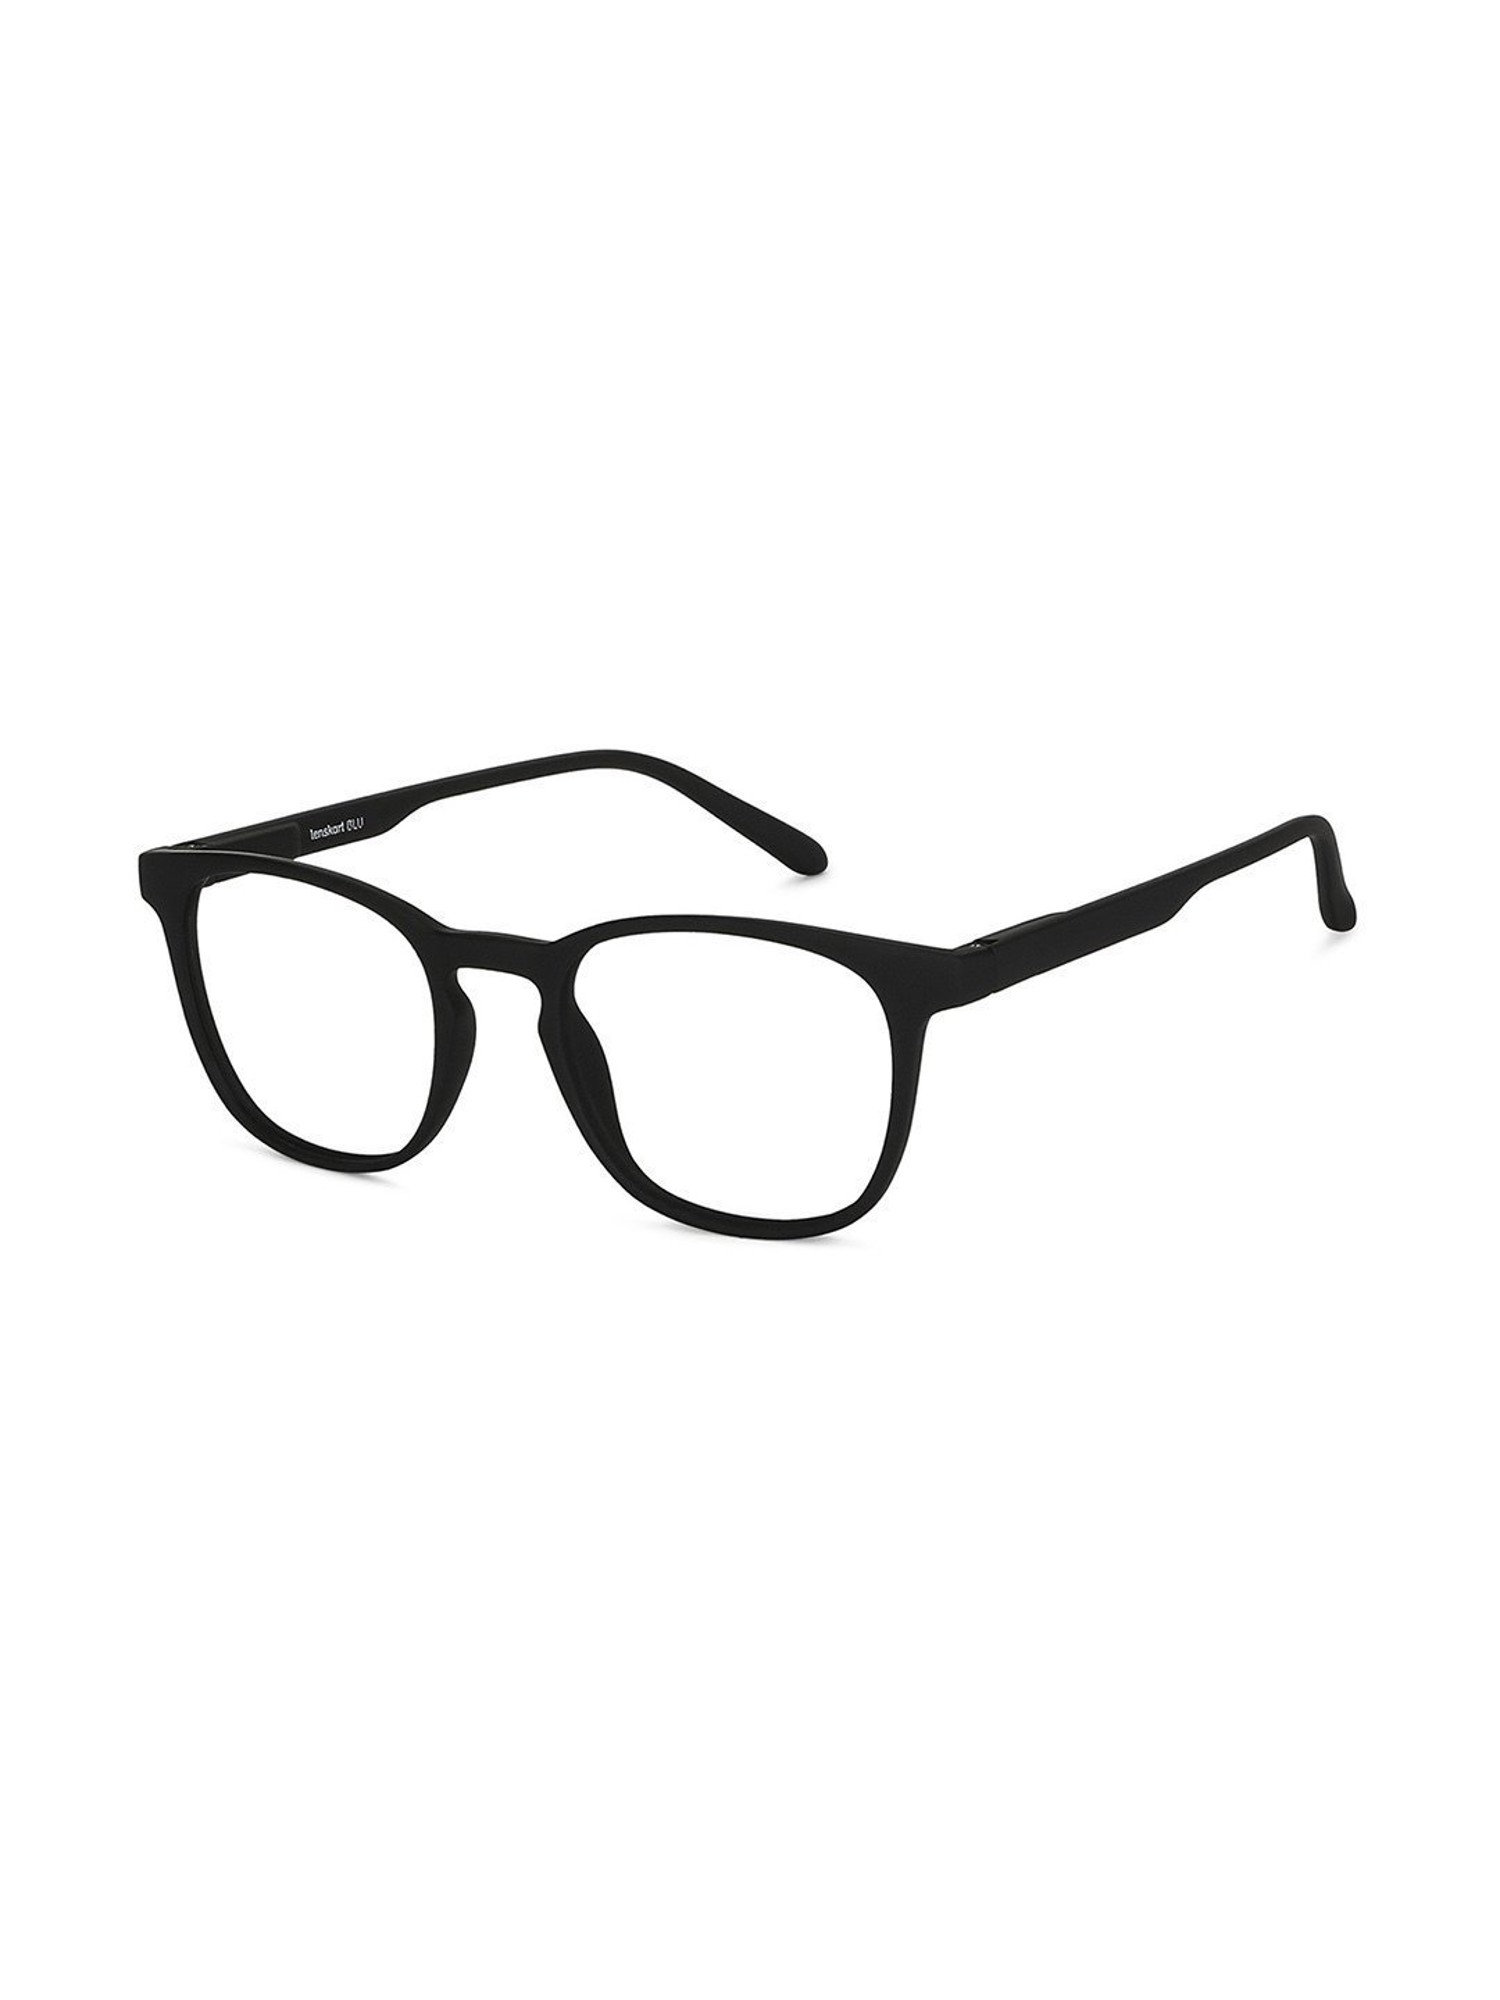 Sunglasses | Lenskart Air Powered Bifocal Glasses (Spects) | Freeup